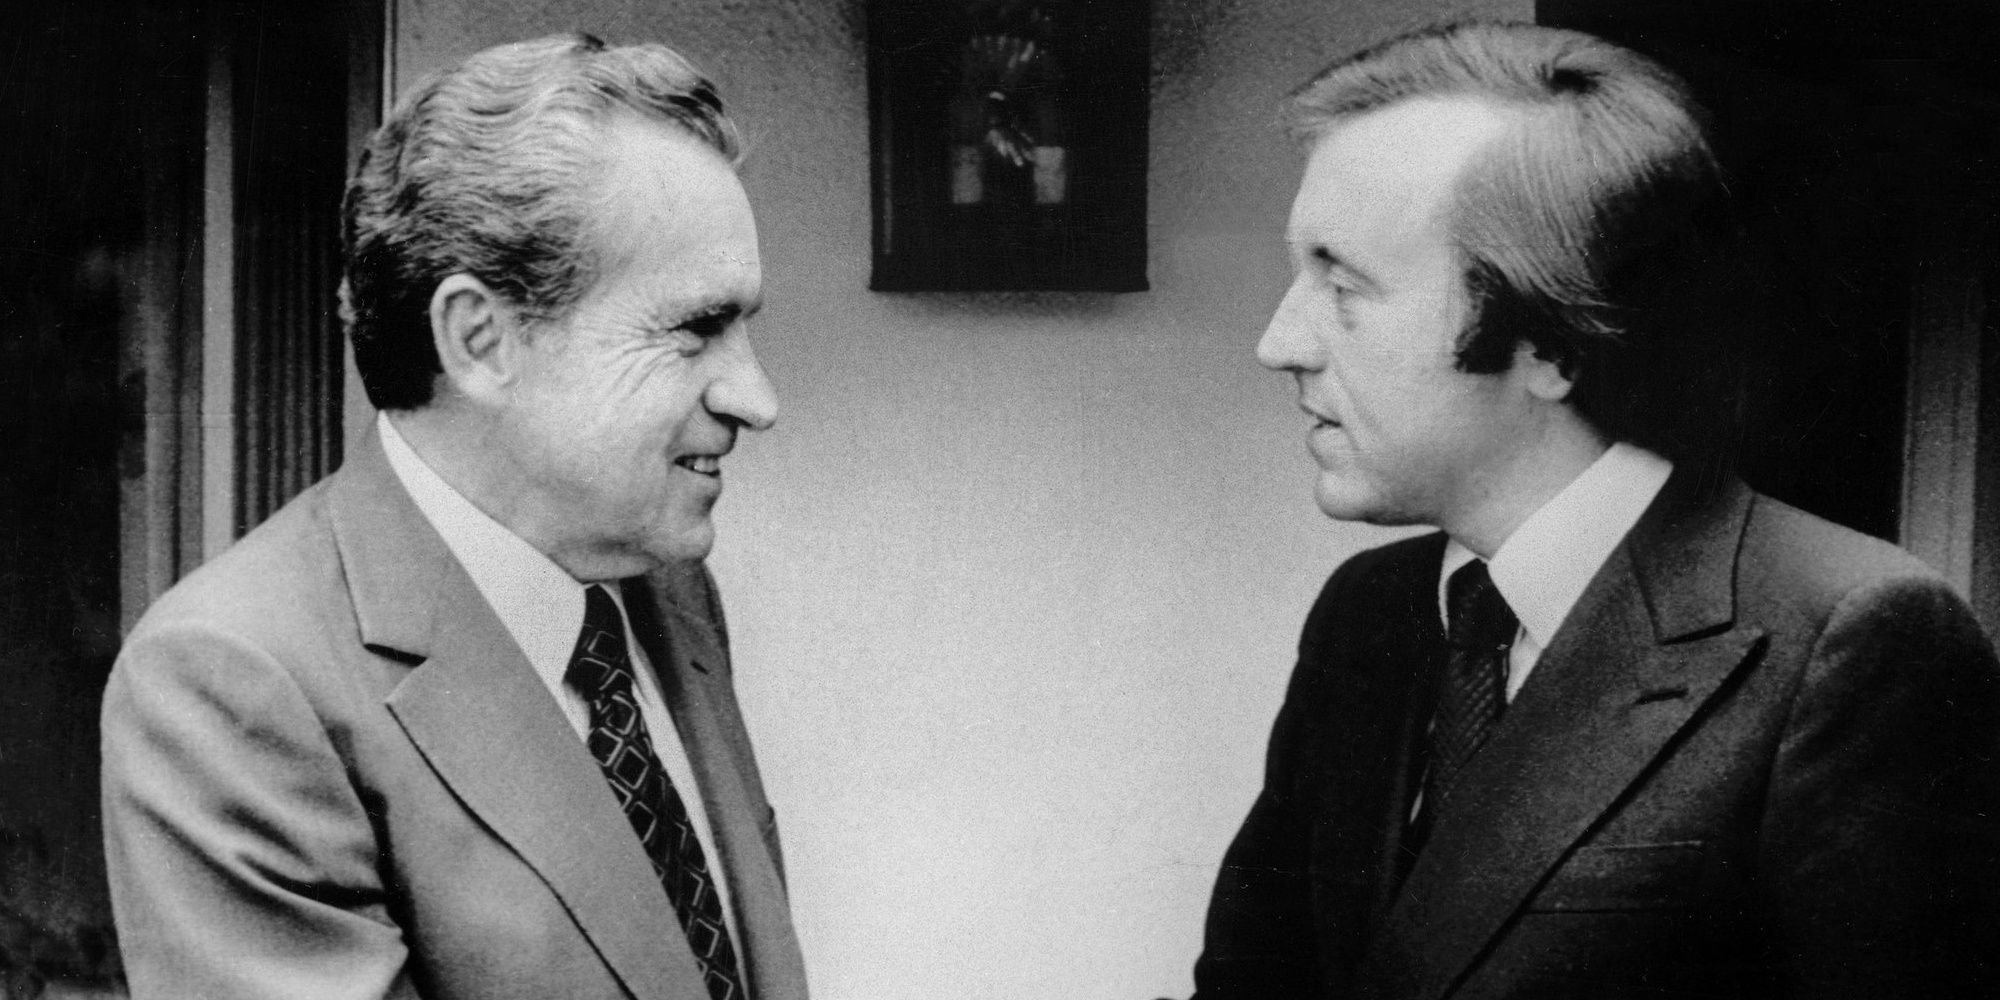 Richard Nixon shaking hands with David Frost 